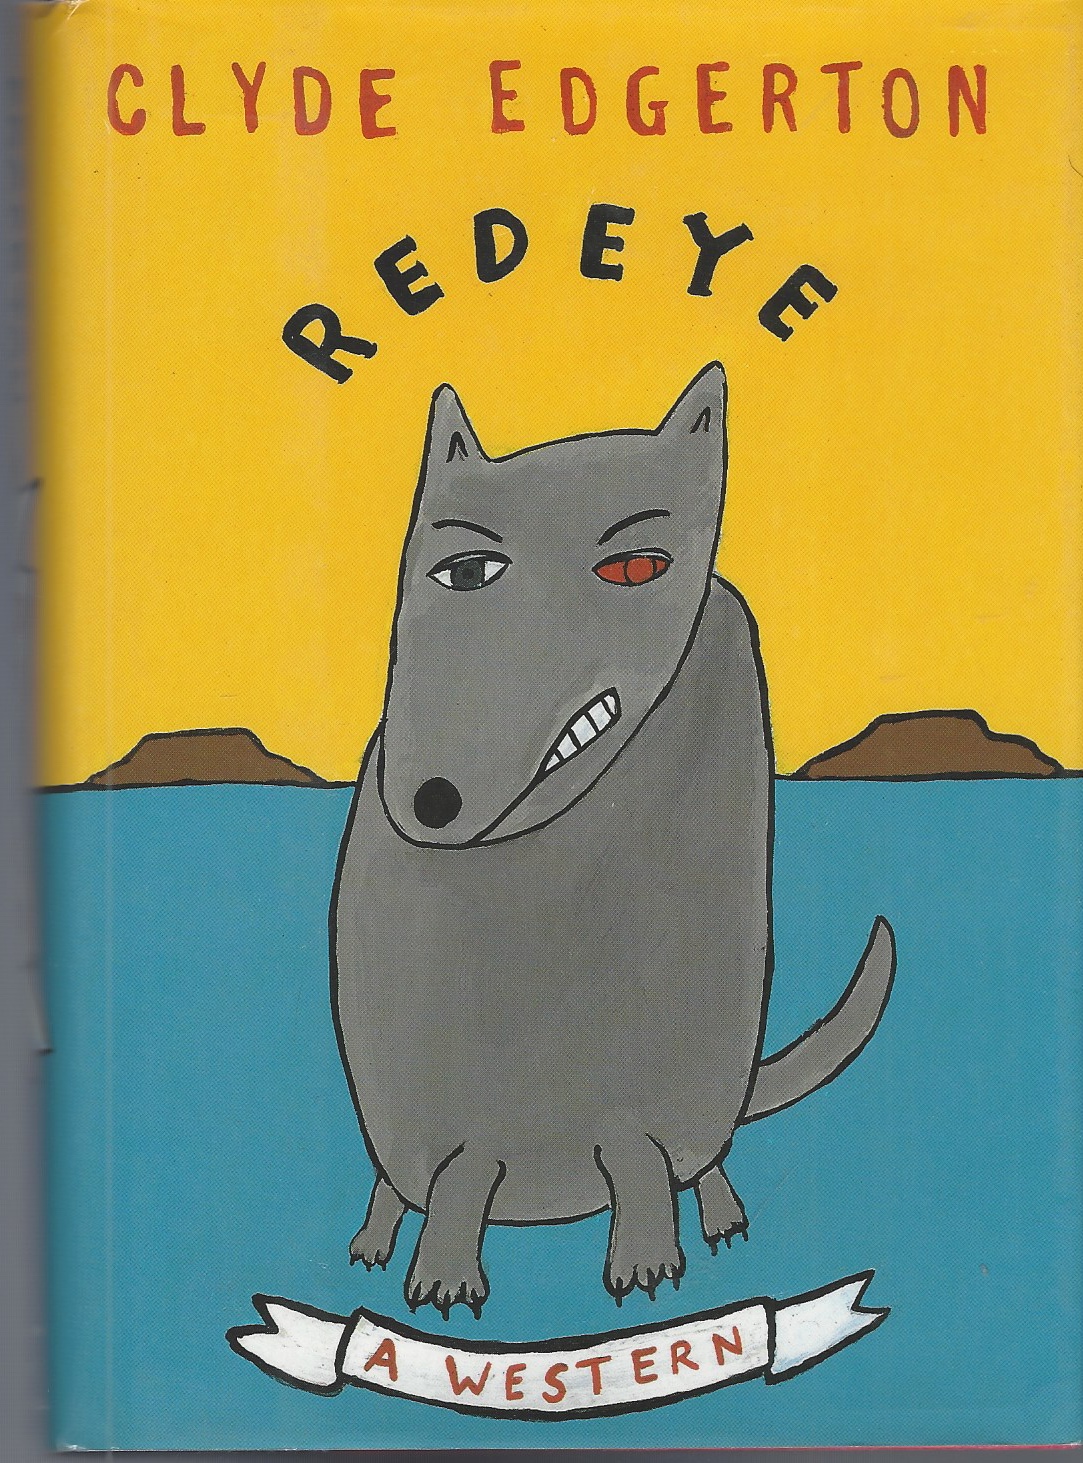 EDGERTON CLYDE - Red Eye a Western